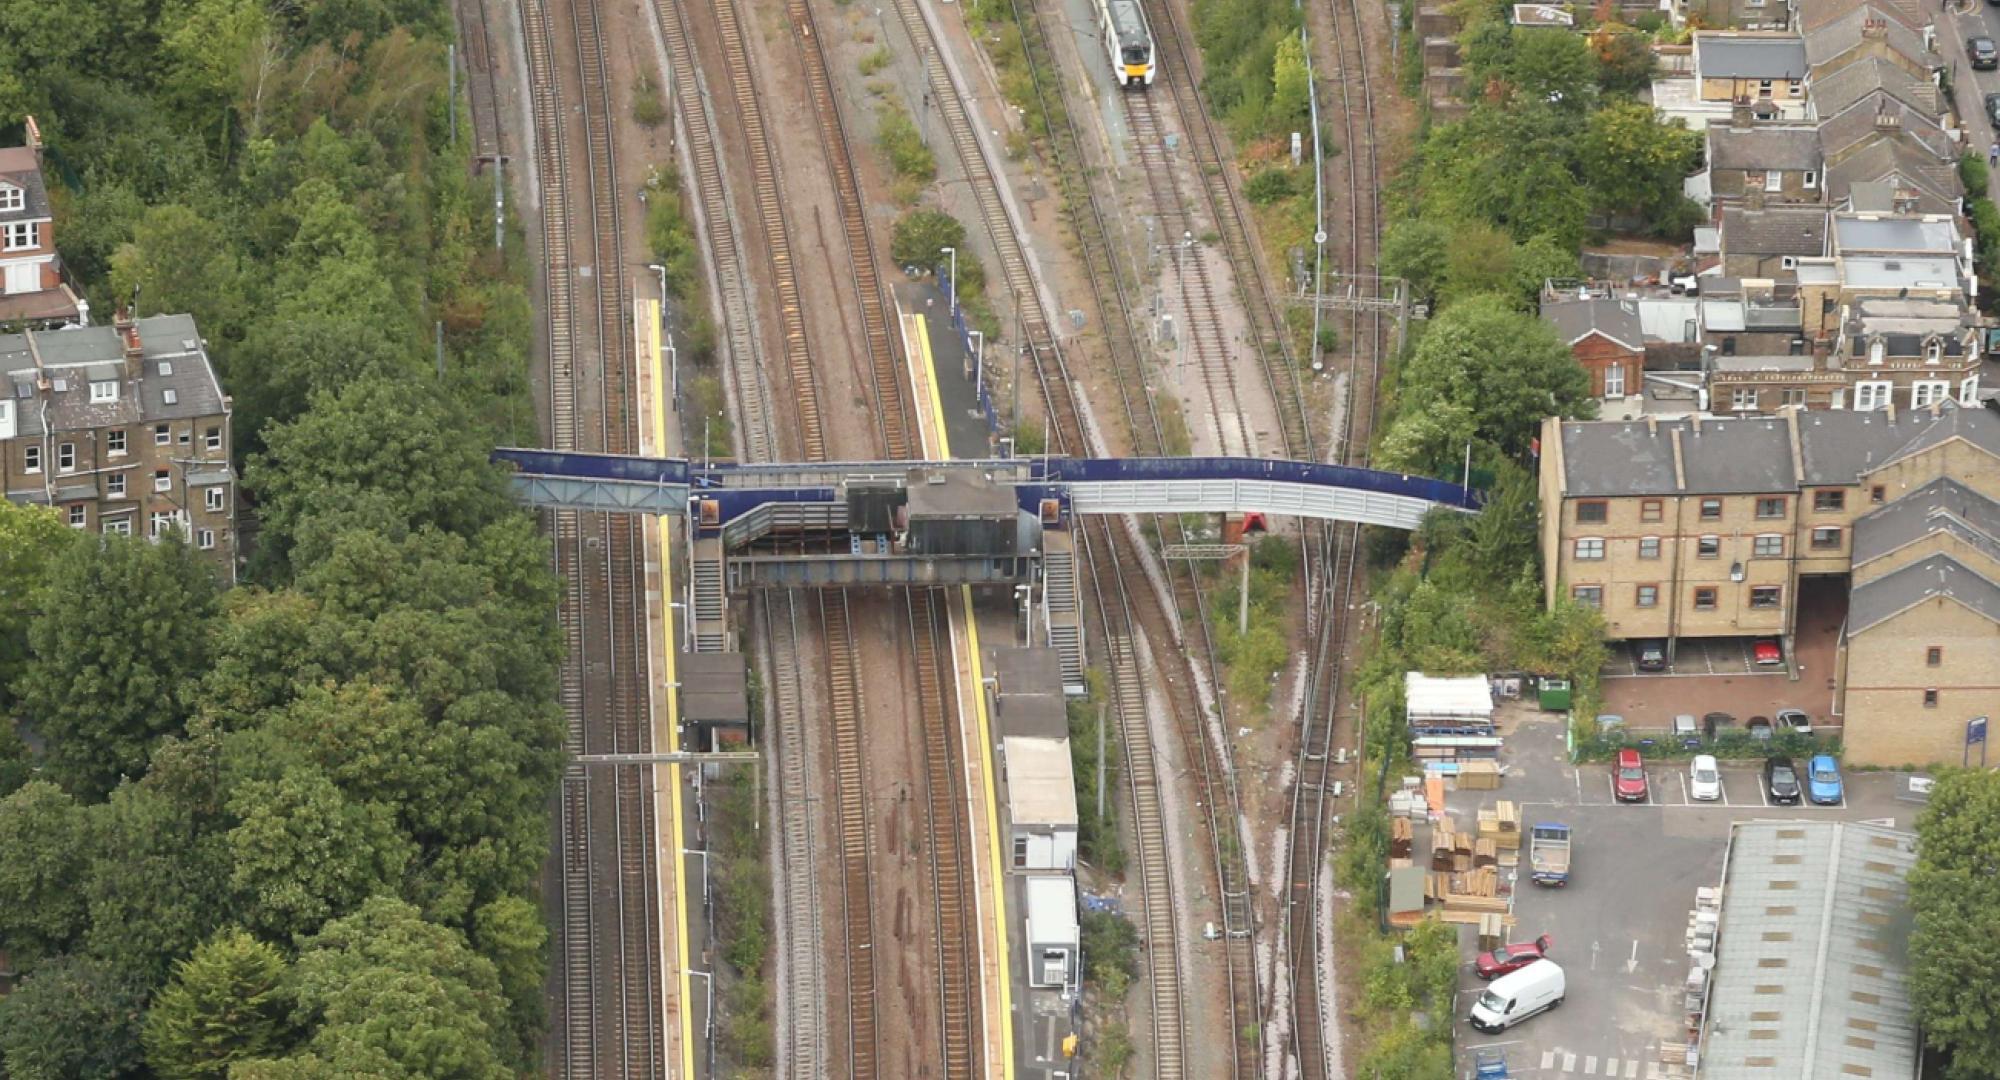 Harringay bridge, via Network Rail 